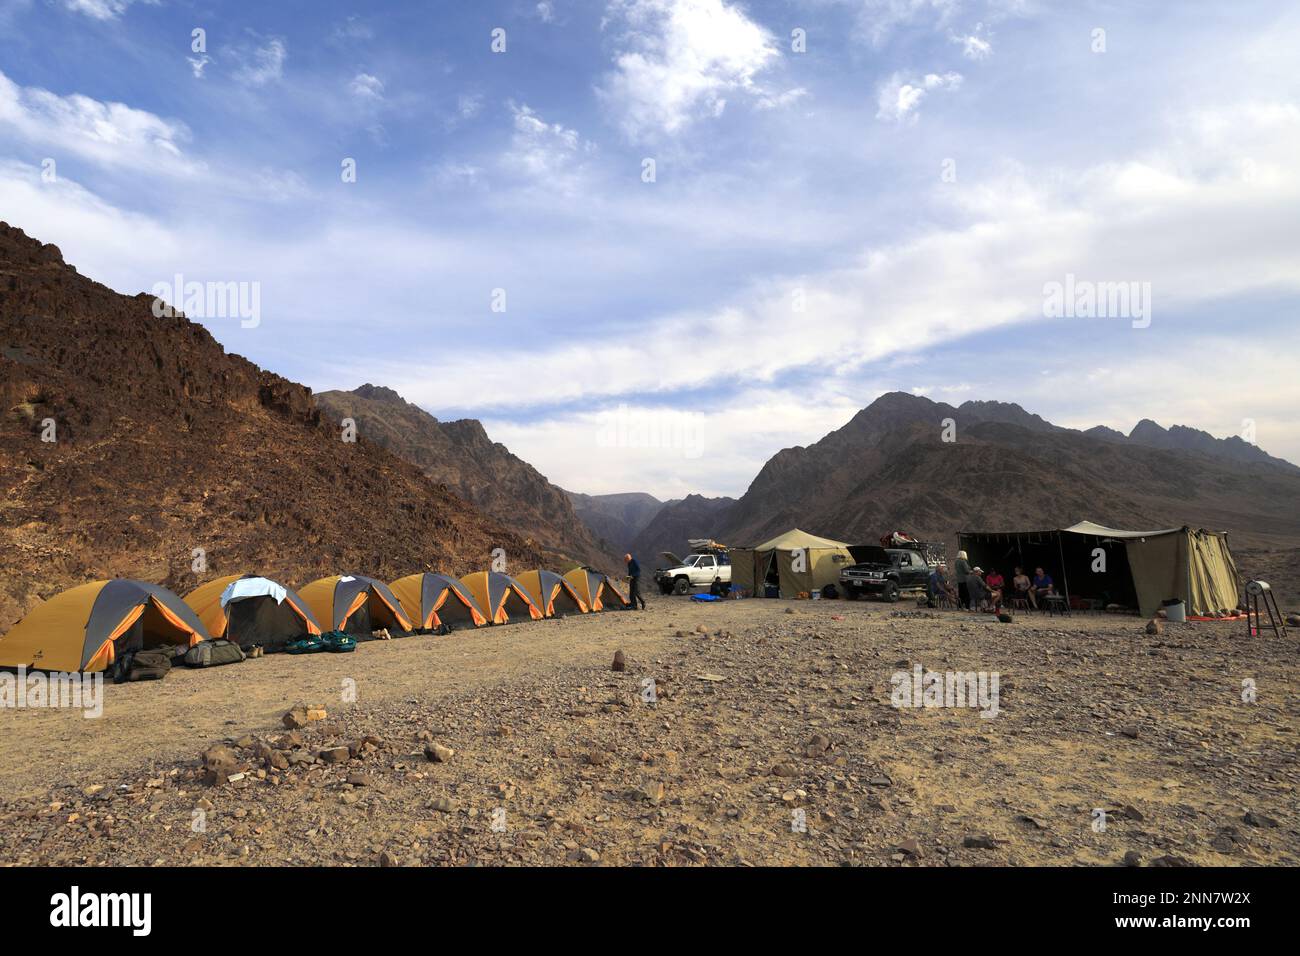 Wild trekkers camp in Wadi Barwas, Al-Sharat, Wadi Araba Desert, south-central Jordan, Middle East. Stock Photo